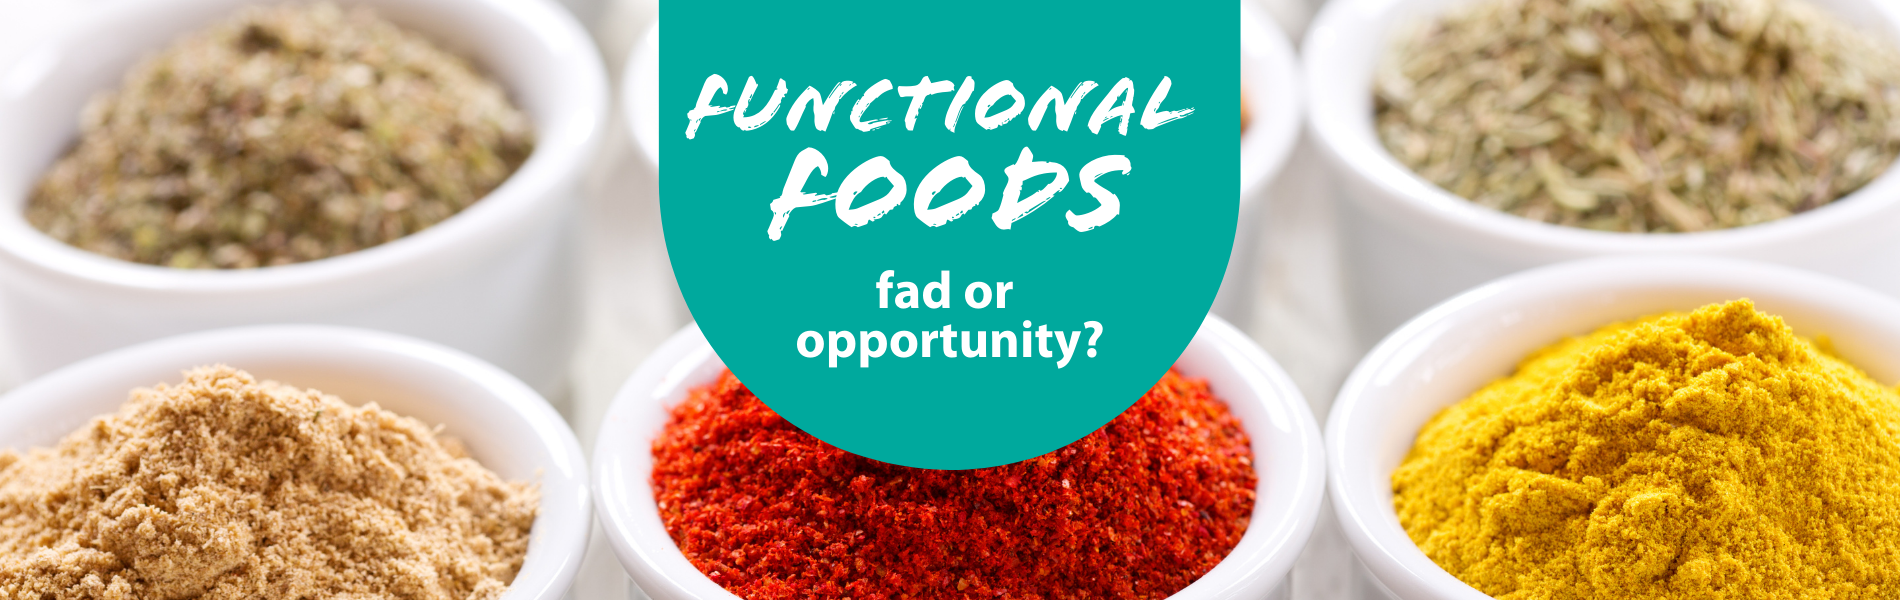 Functional Foods Article Header